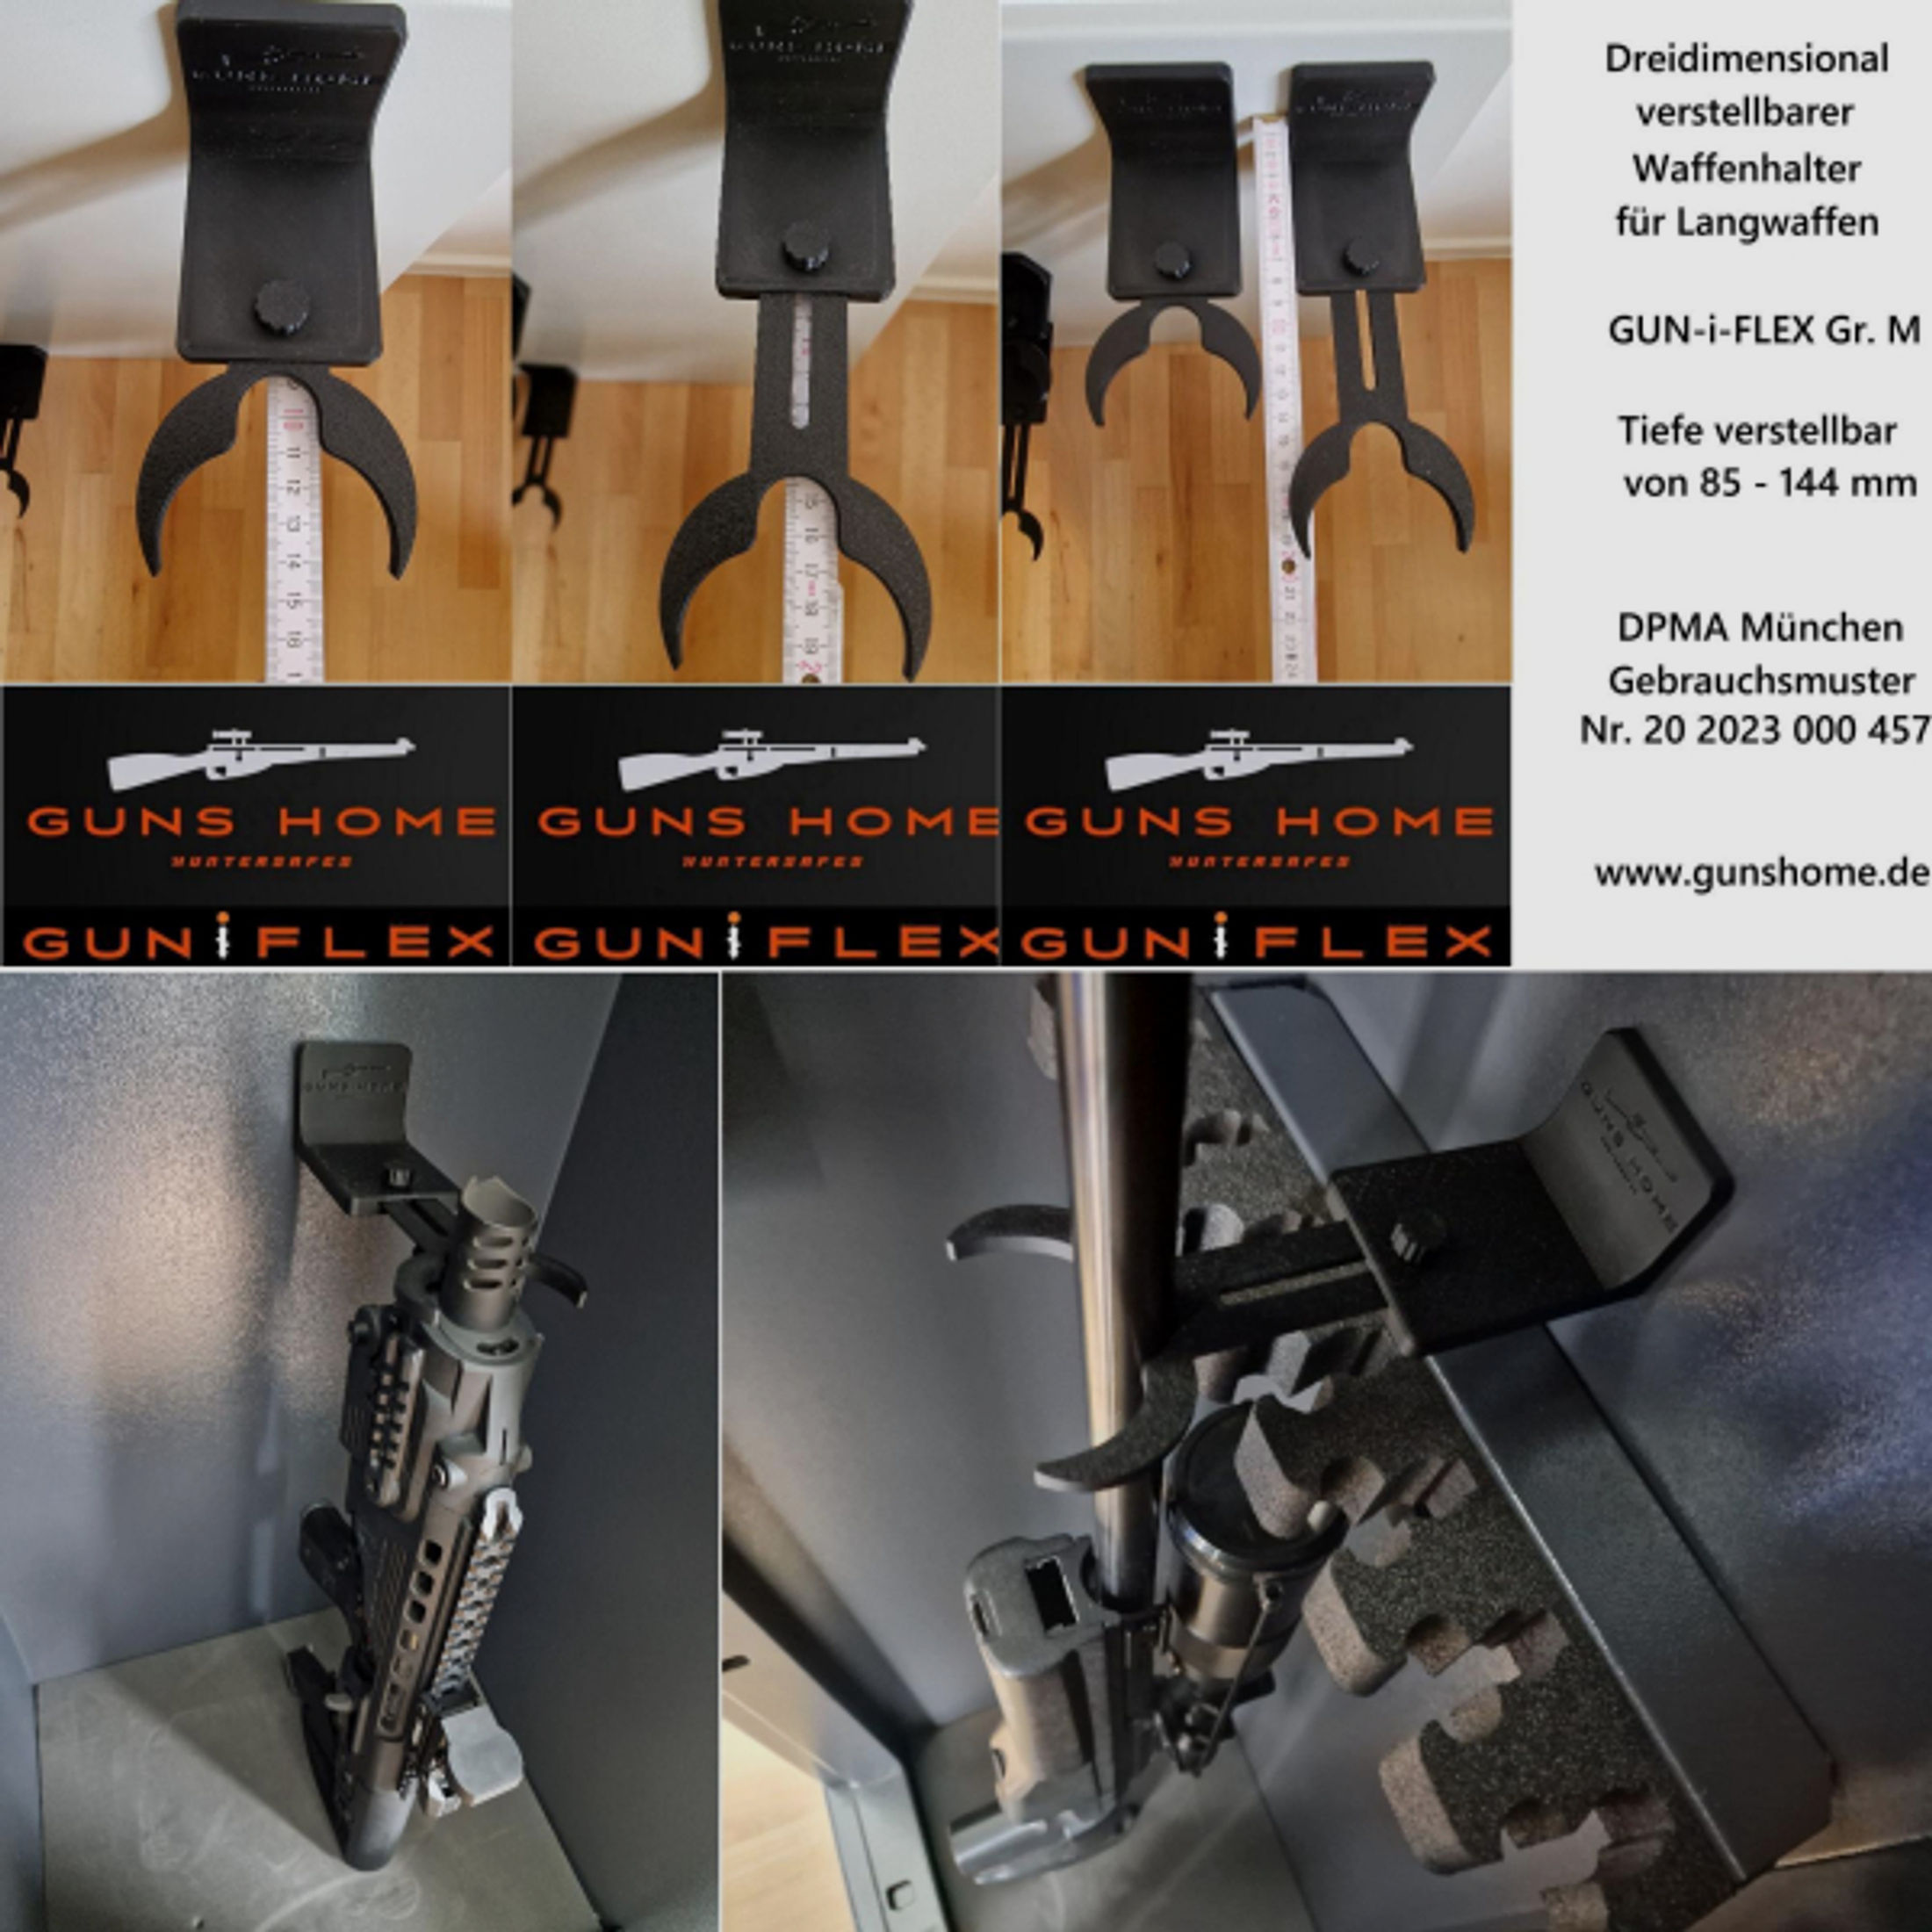 Waffenhalter 3-dimensional verstellbar GUN-i-FLEX Gr. M